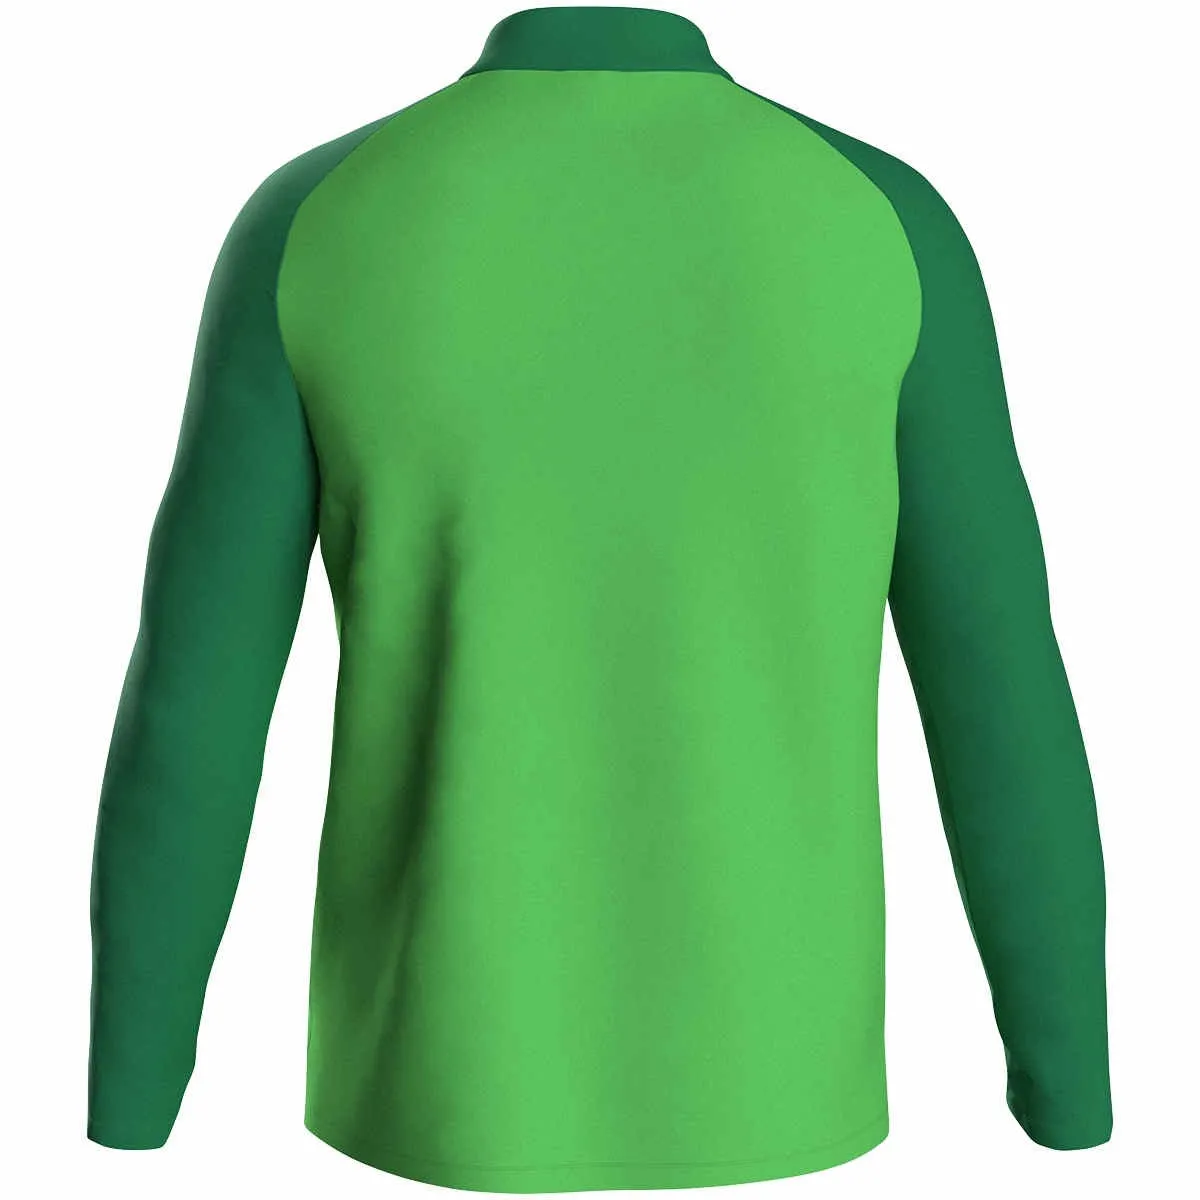 JAKO Polyesterjacke Iconic soft green/sportgrün